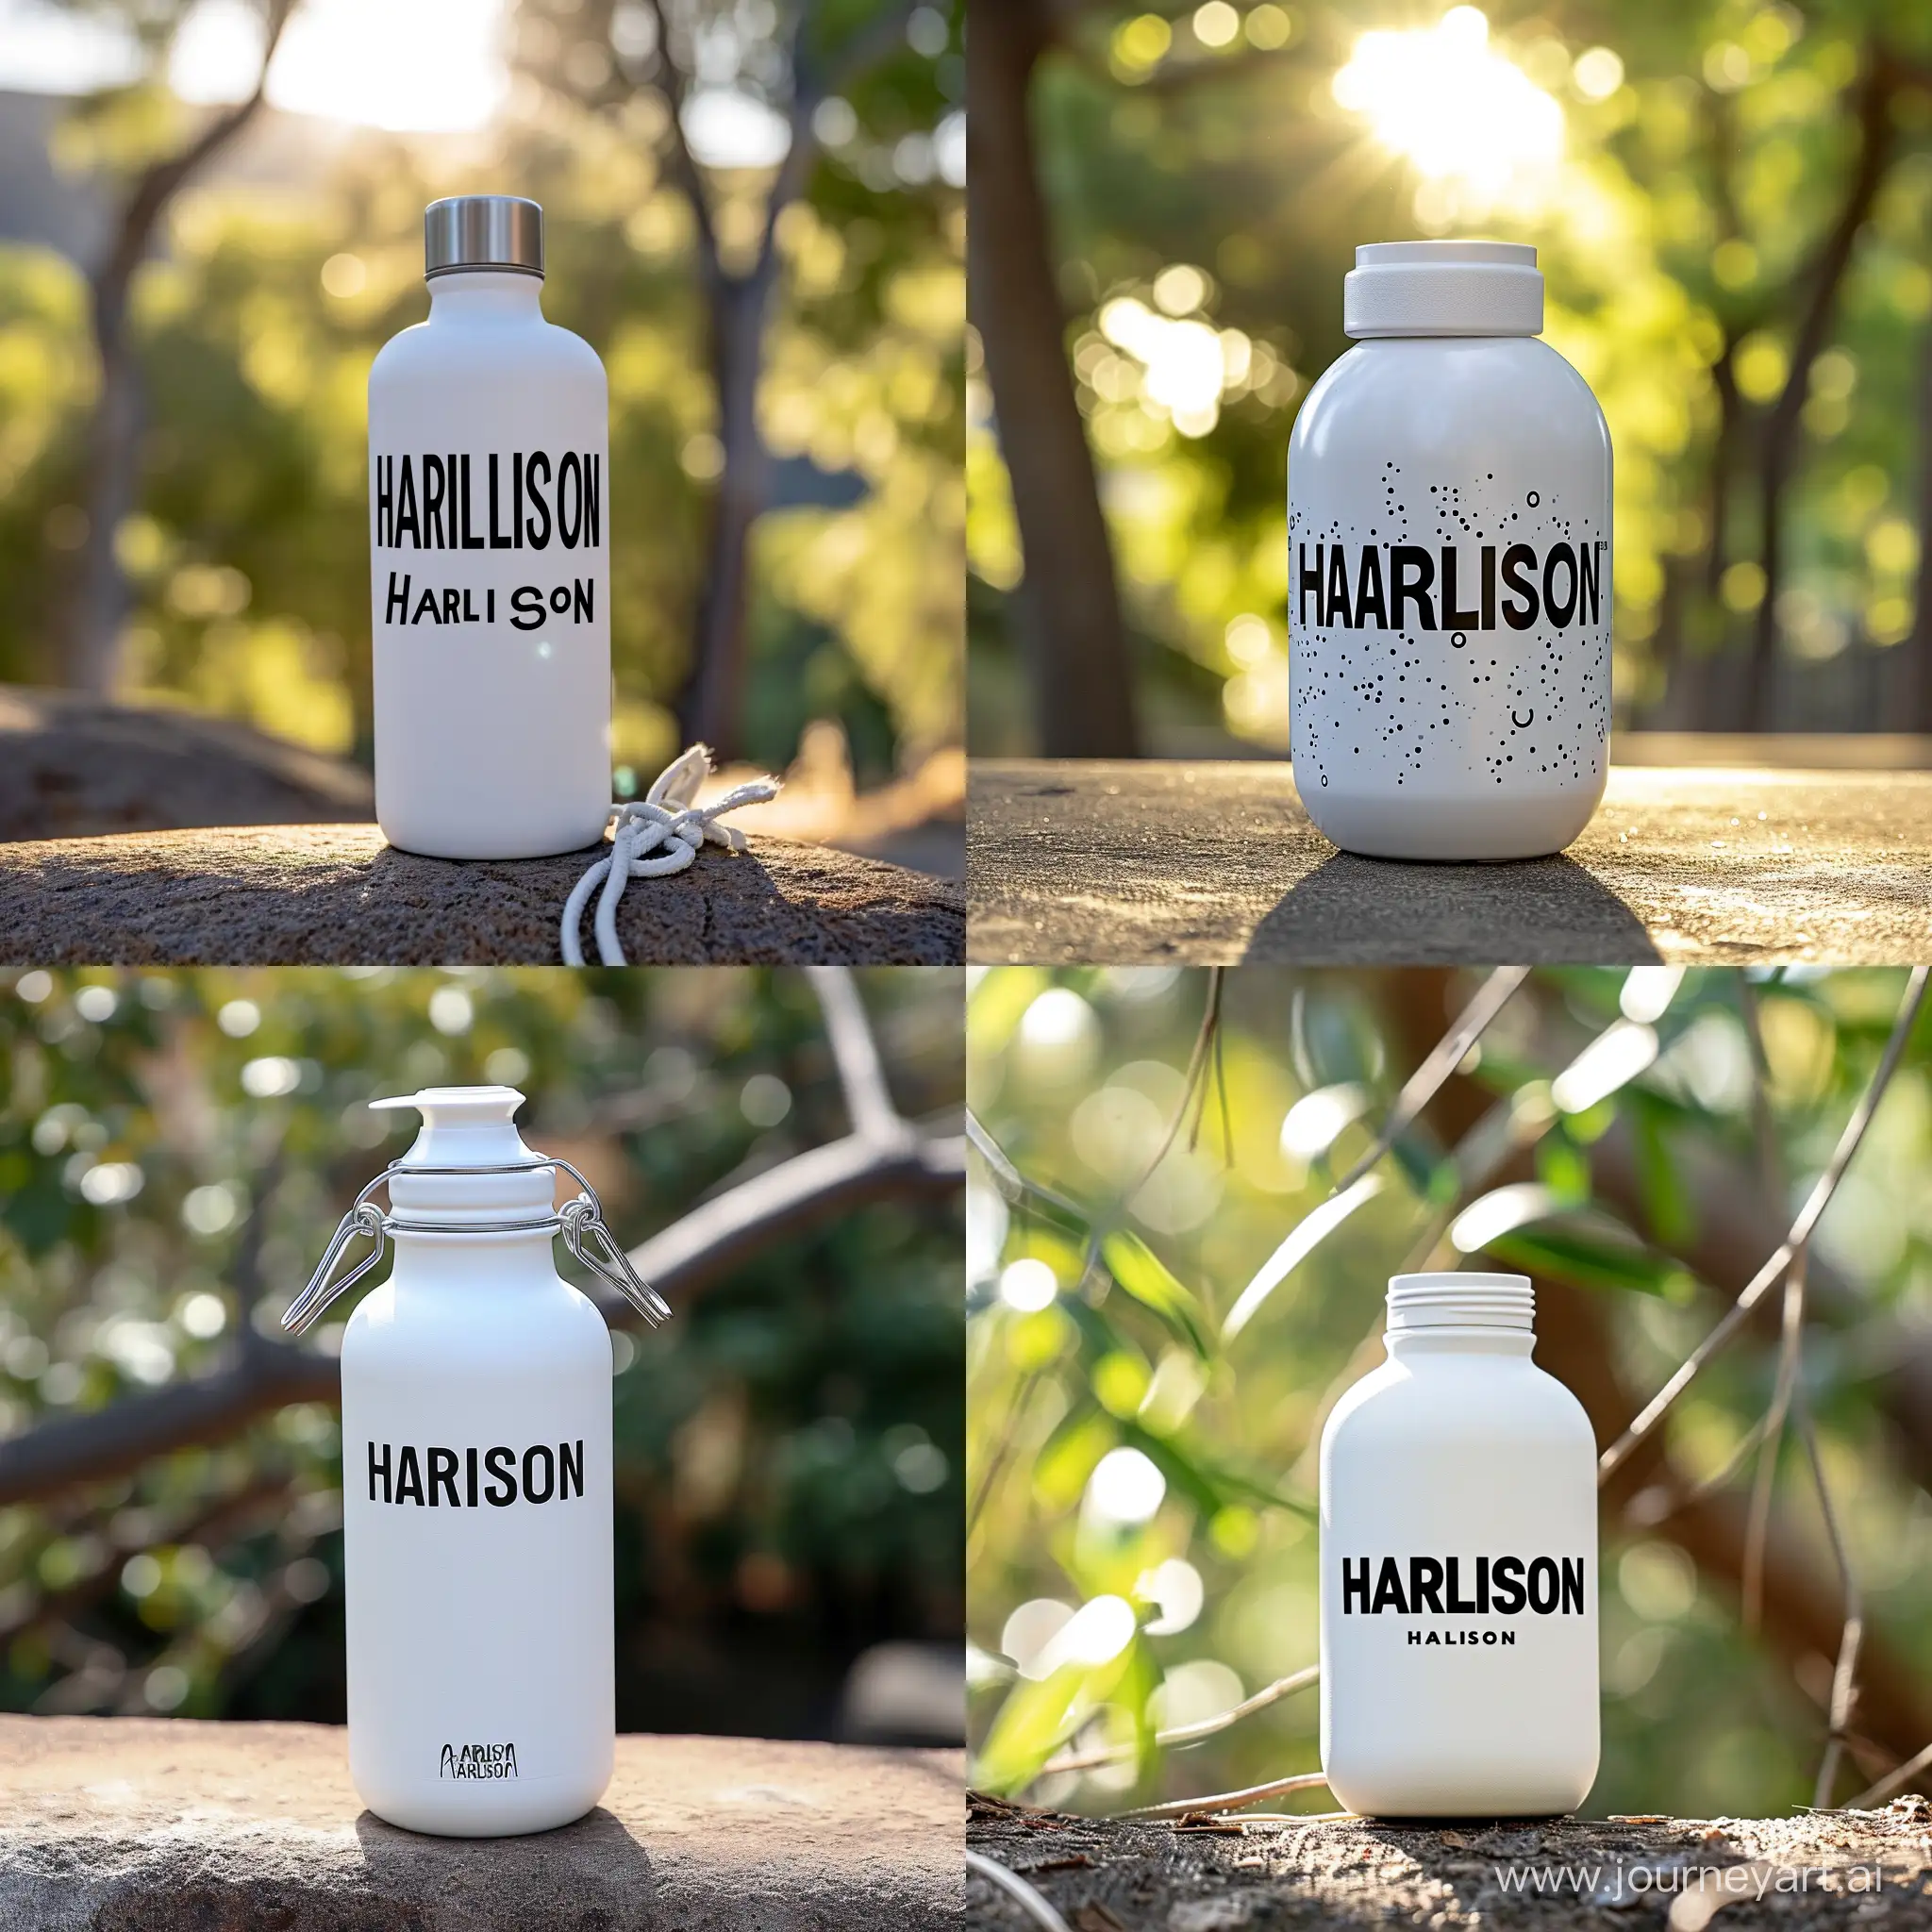 white gym bottle with text “HARLISON”, sun light, day, --v 6